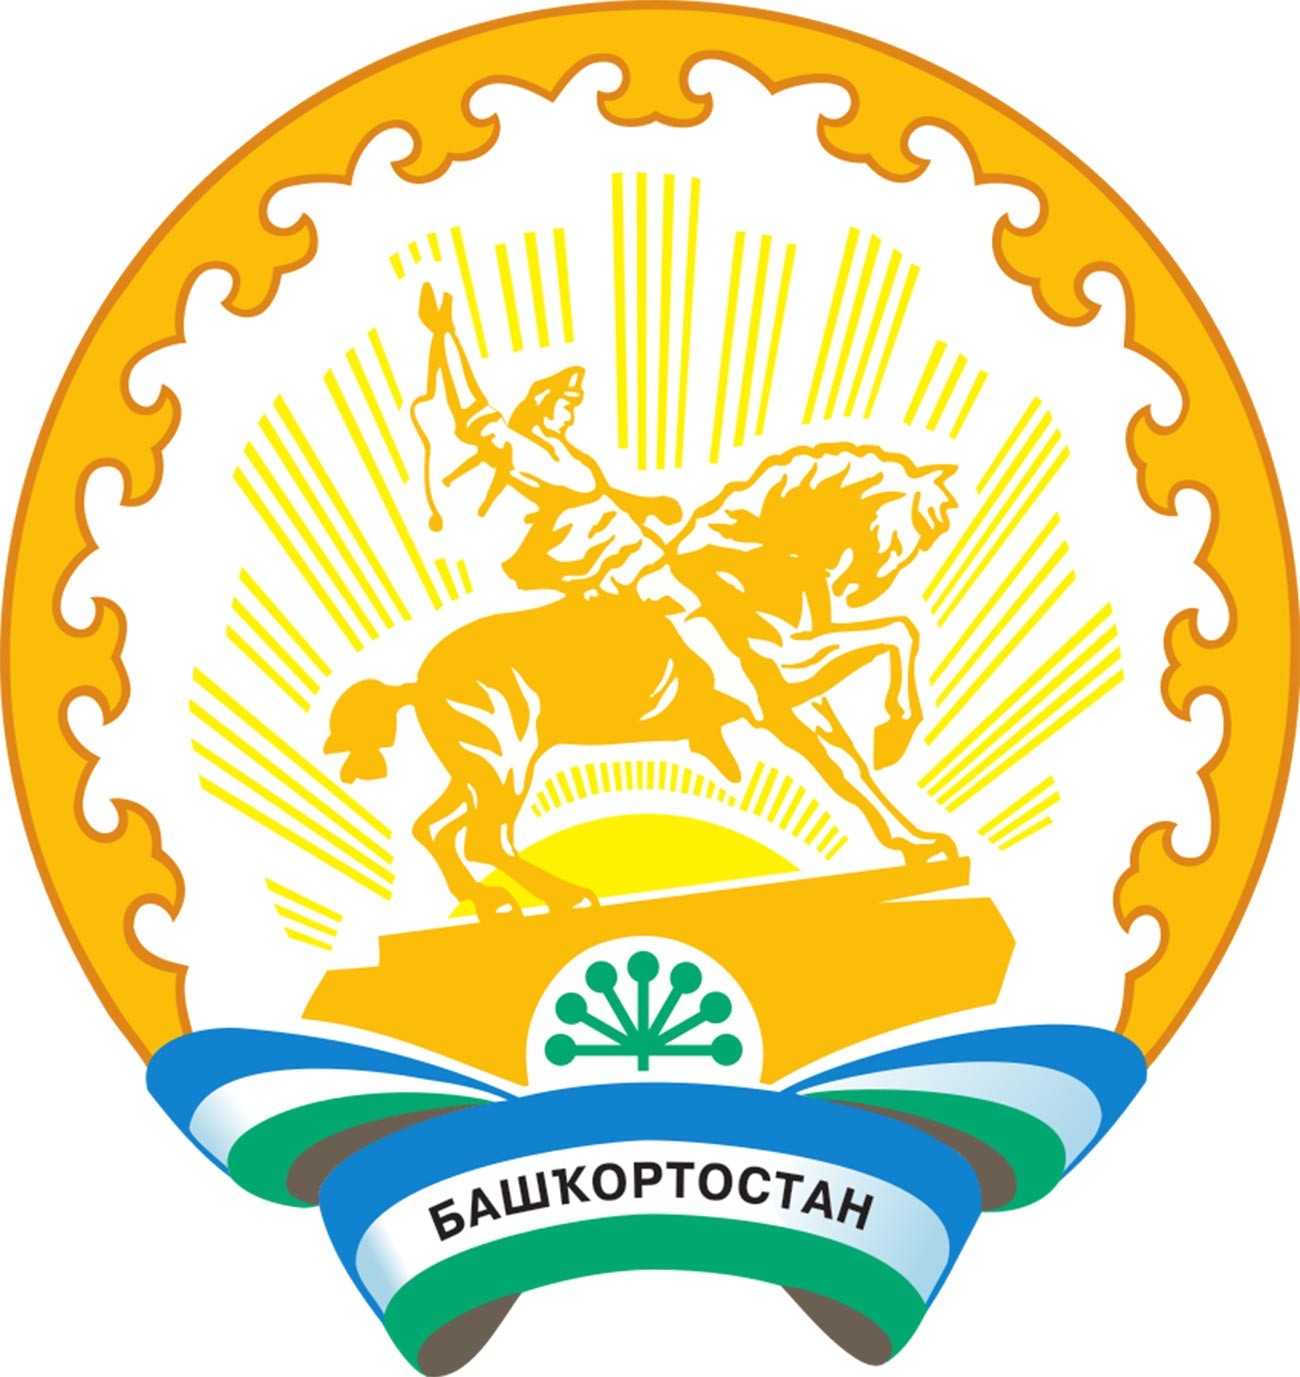 L'emblema ufficiale della Repubblica del Bashkortostan (Baschiria)